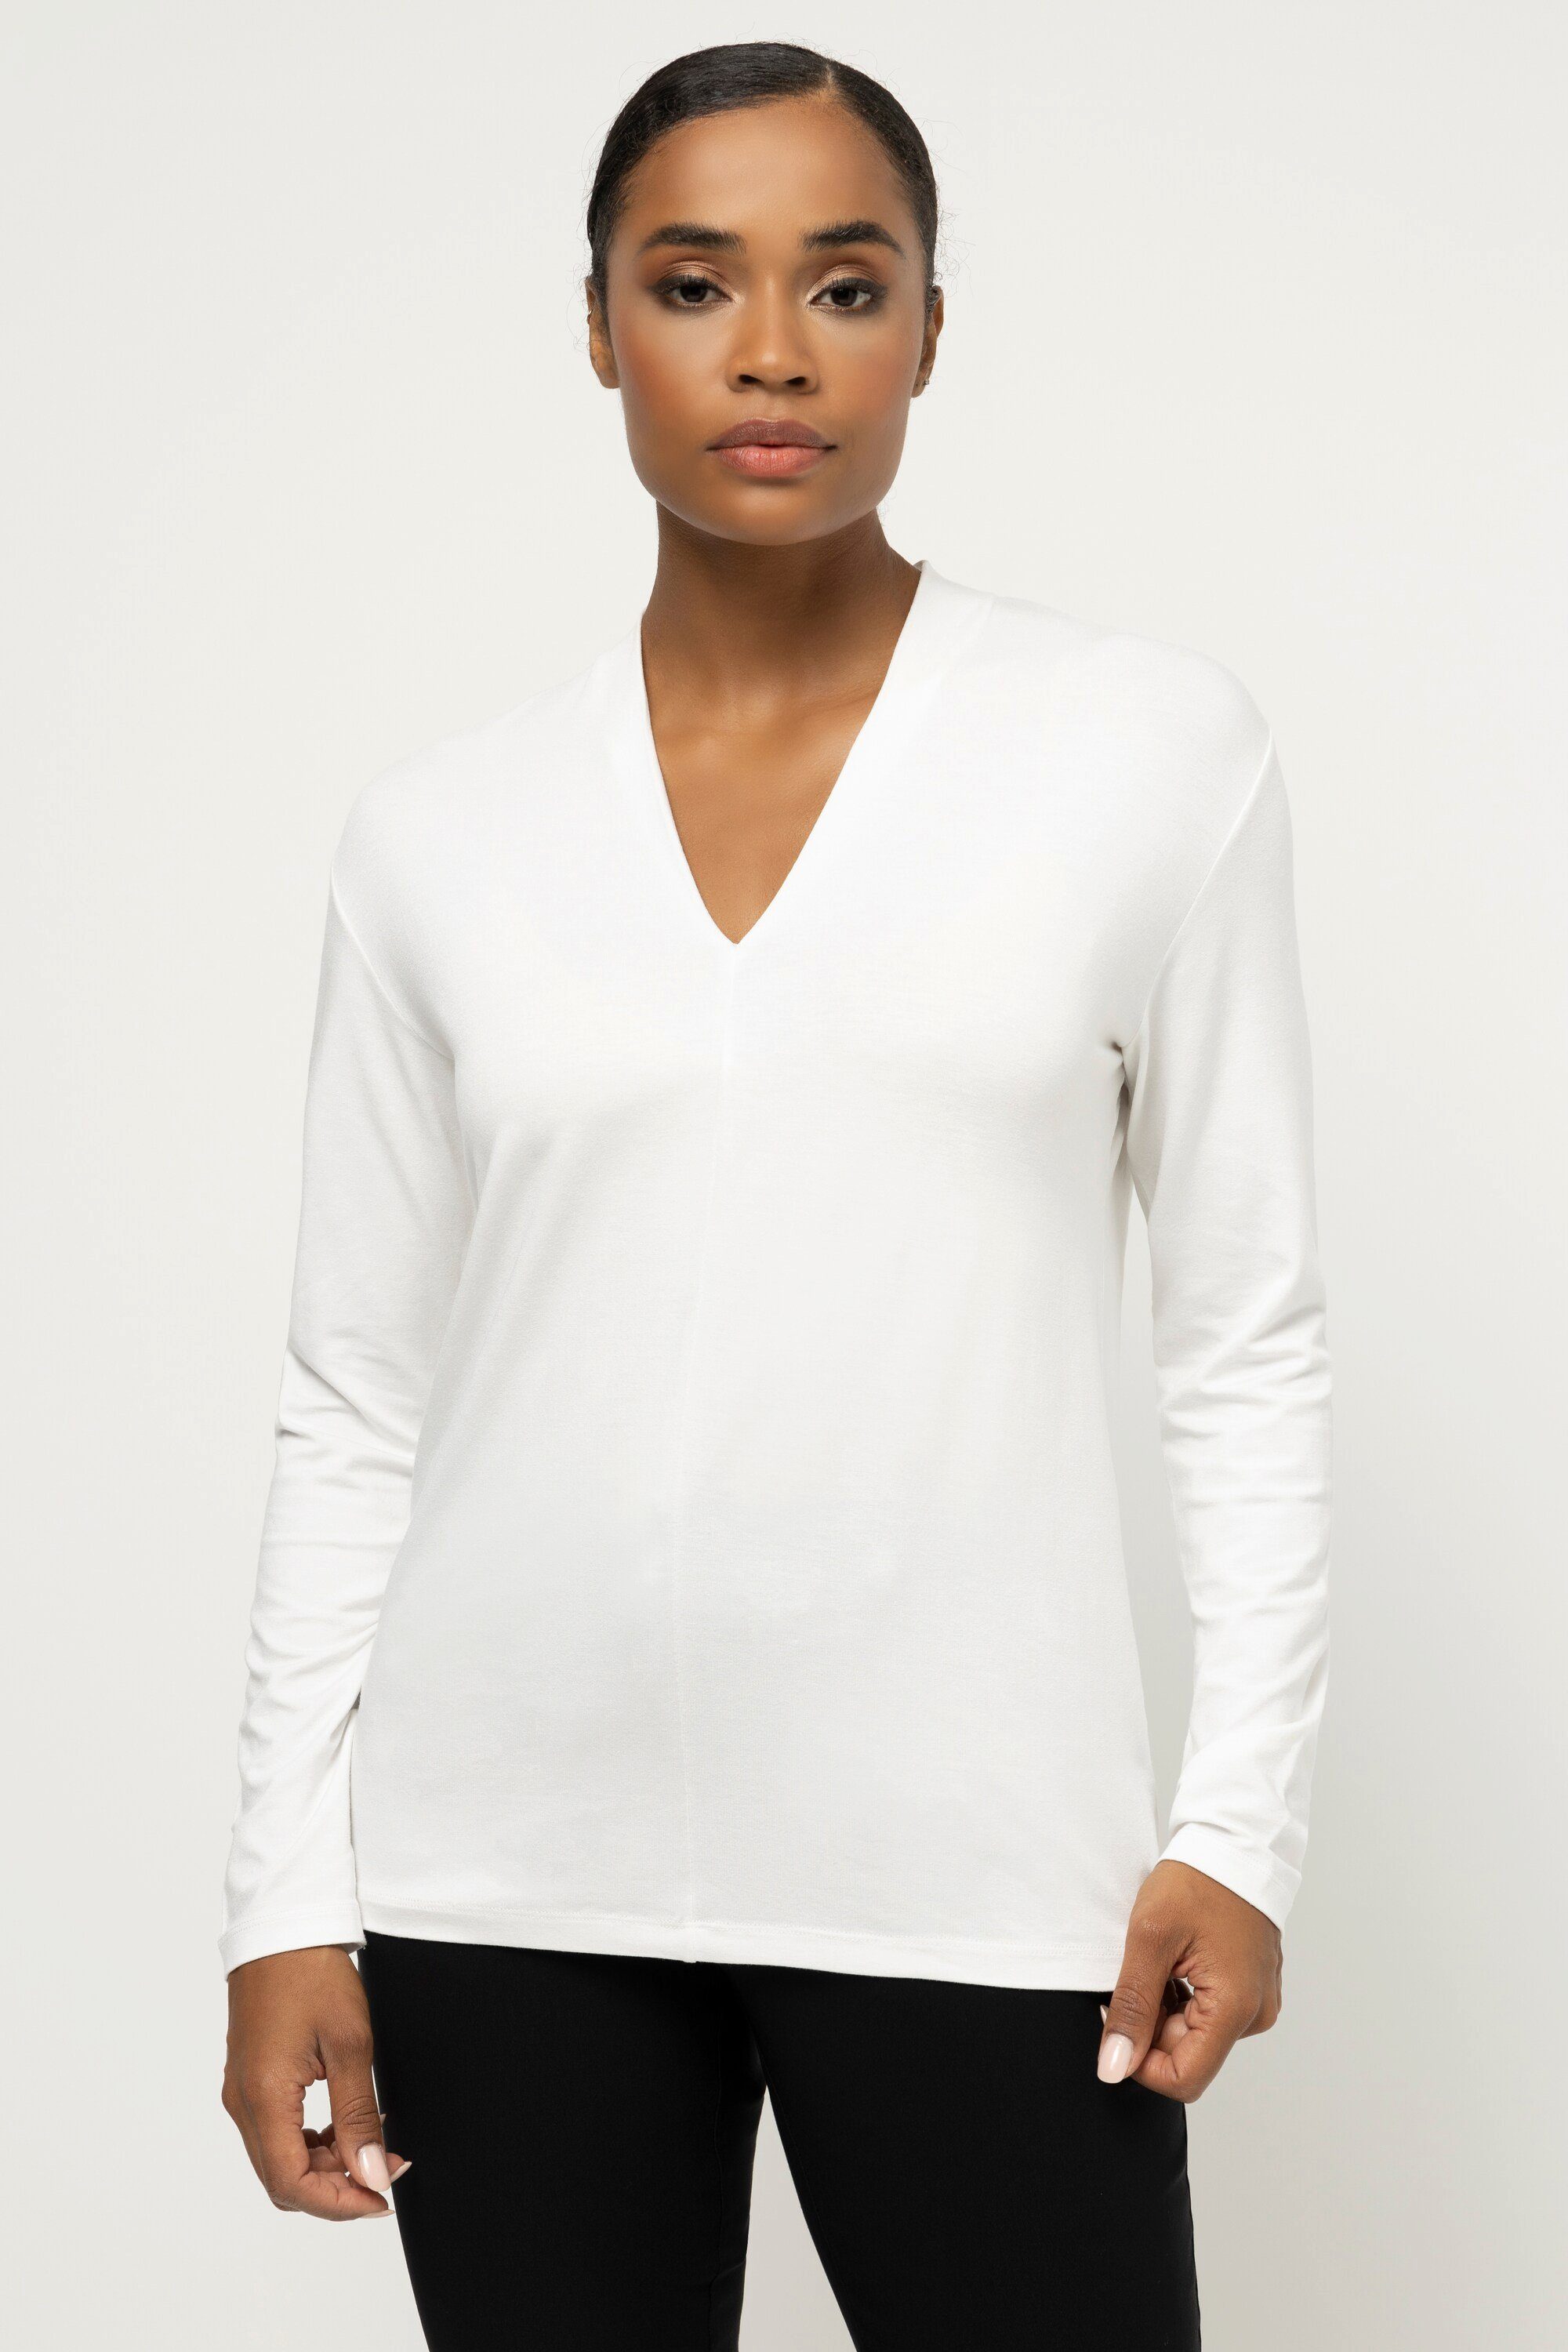 Gina Laura Langarm V-Ausschnitt Shirt Longsleeve Oversized offwhite